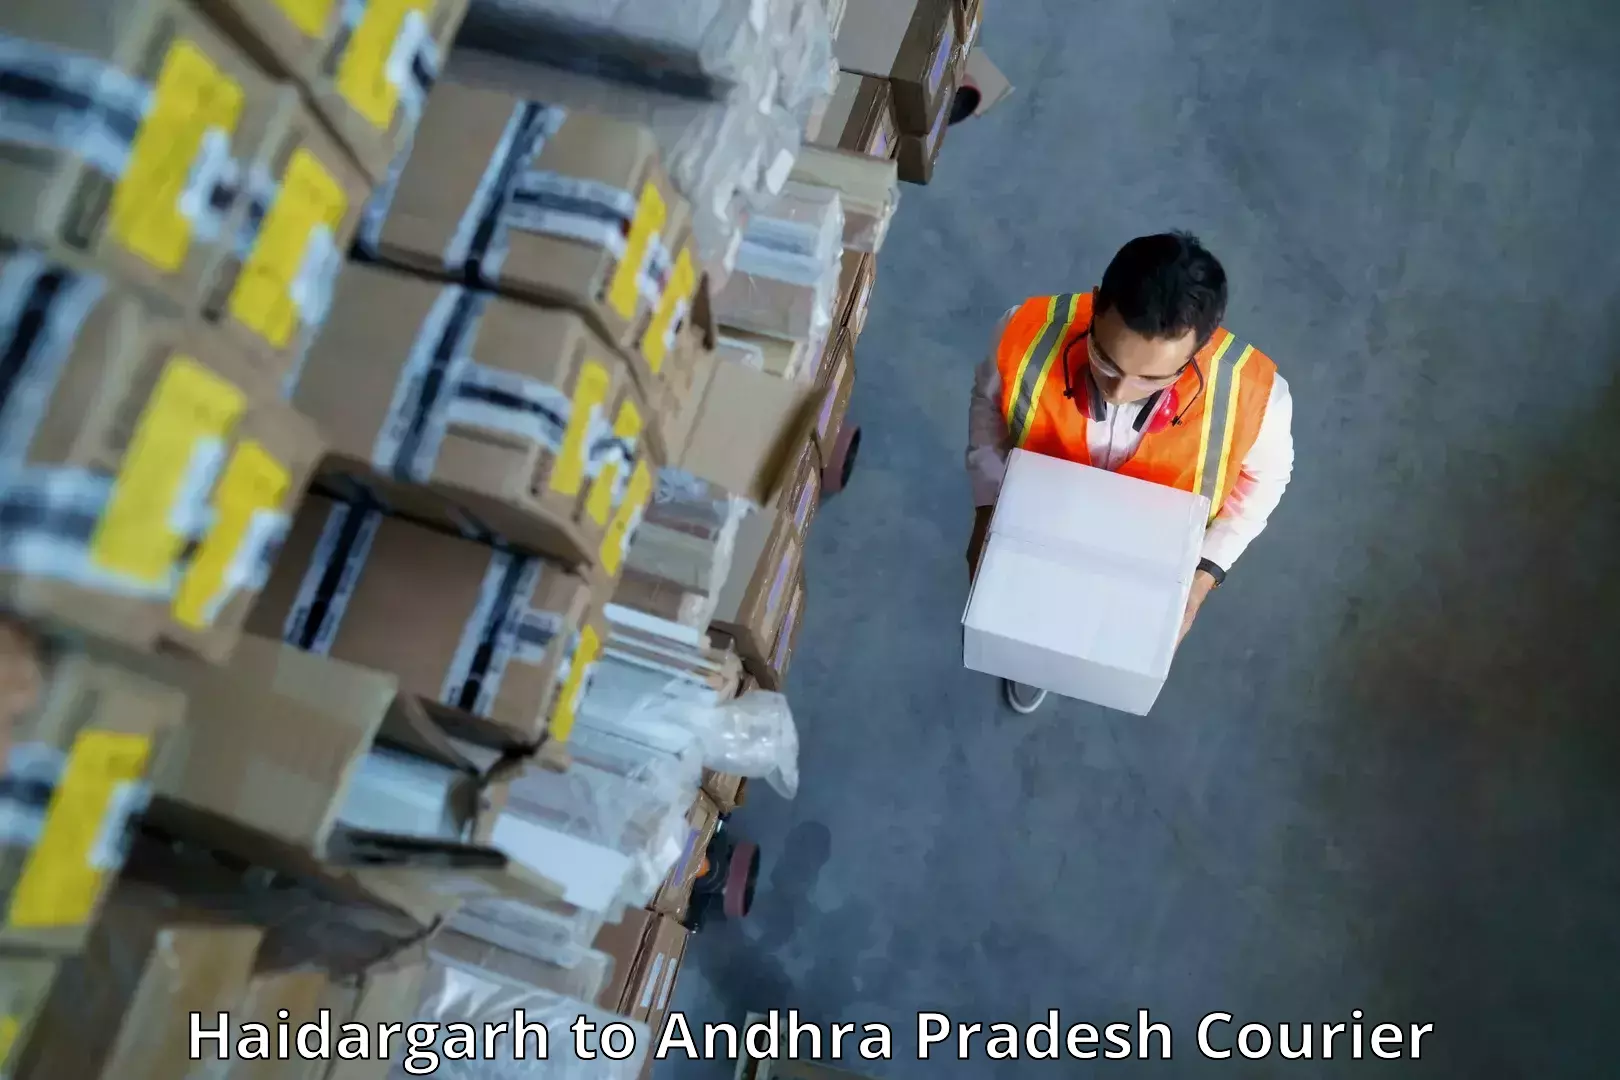 Same-day delivery options Haidargarh to Guntur